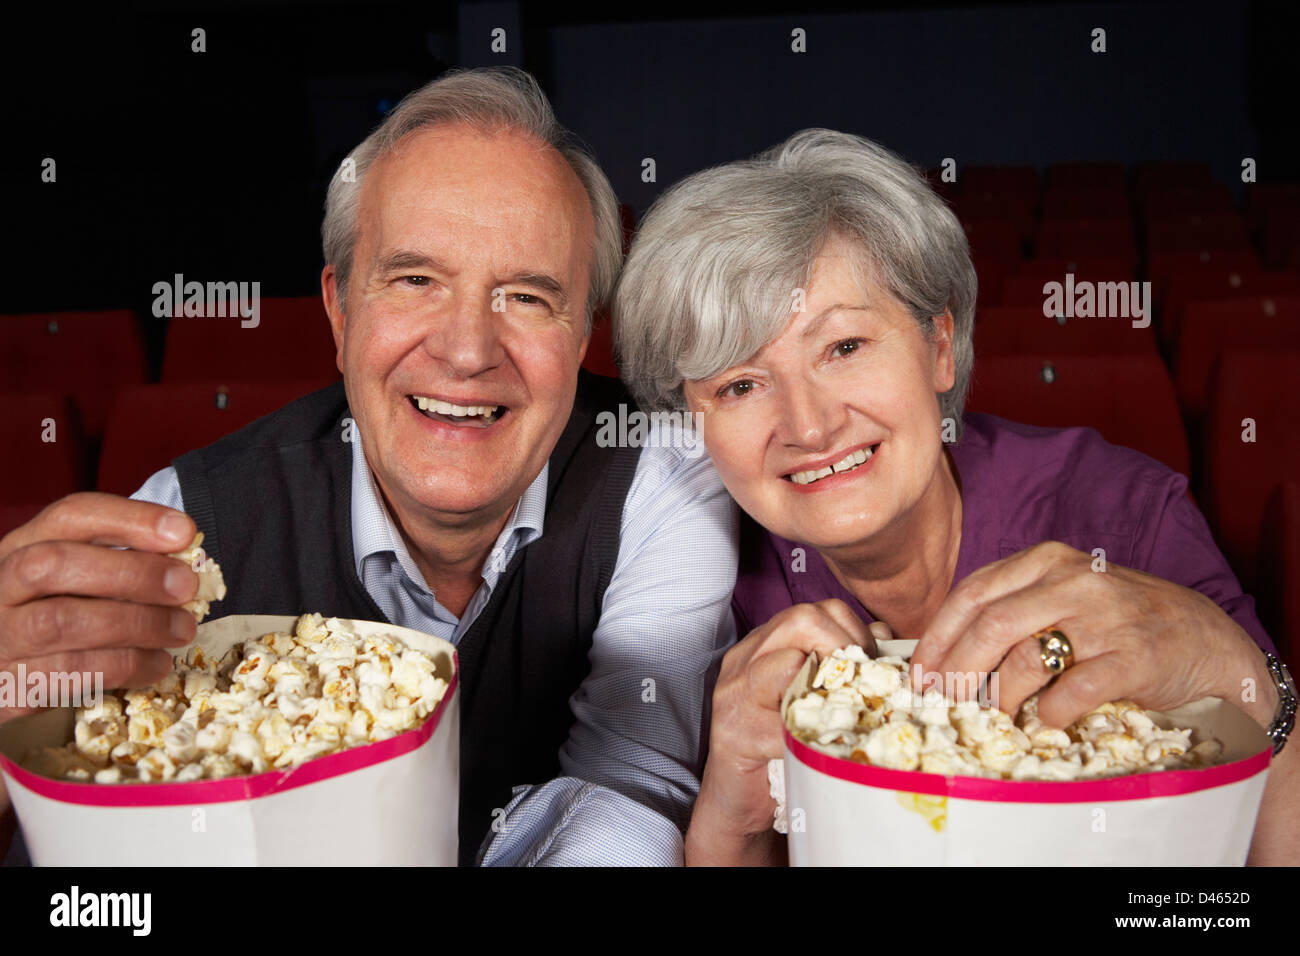 Senior Couple Watching Film In Cinema Stock Photo